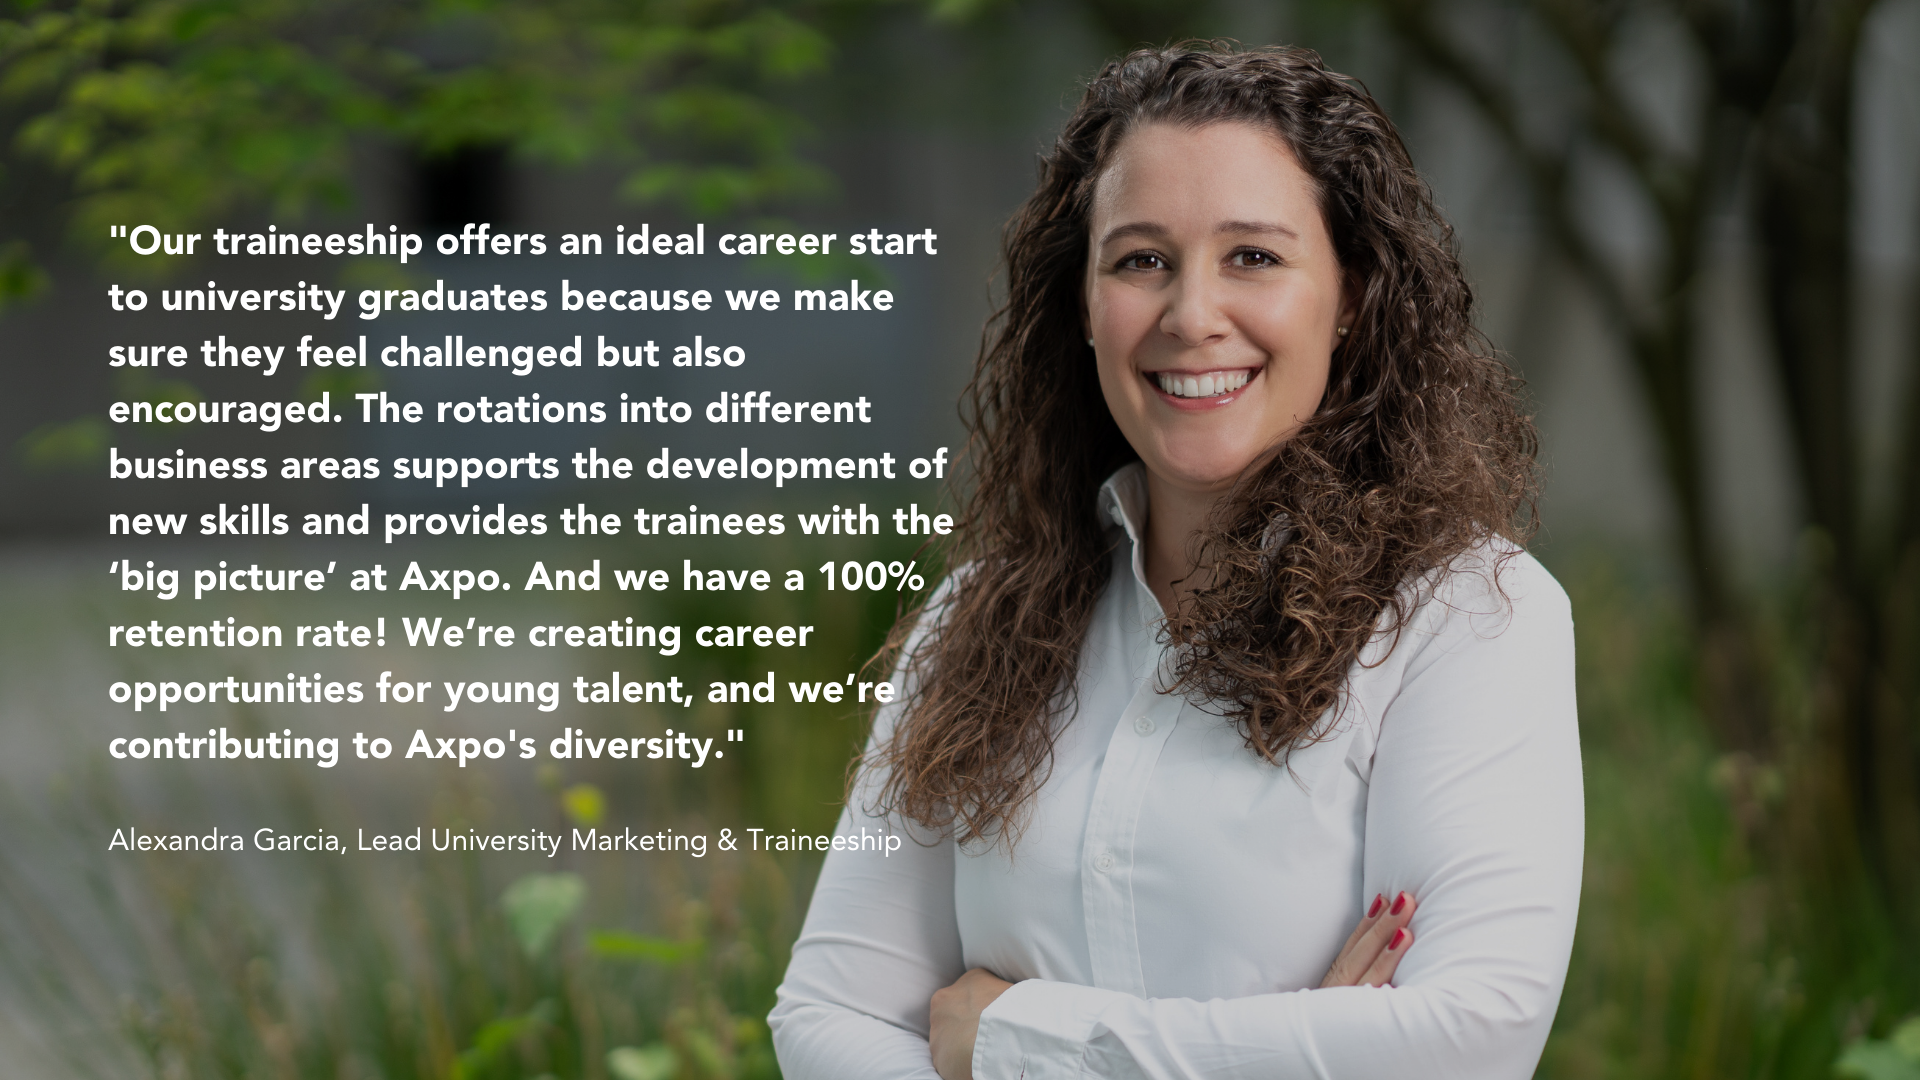 Alexandra Garcia, Lead University Marketing & Traineeship